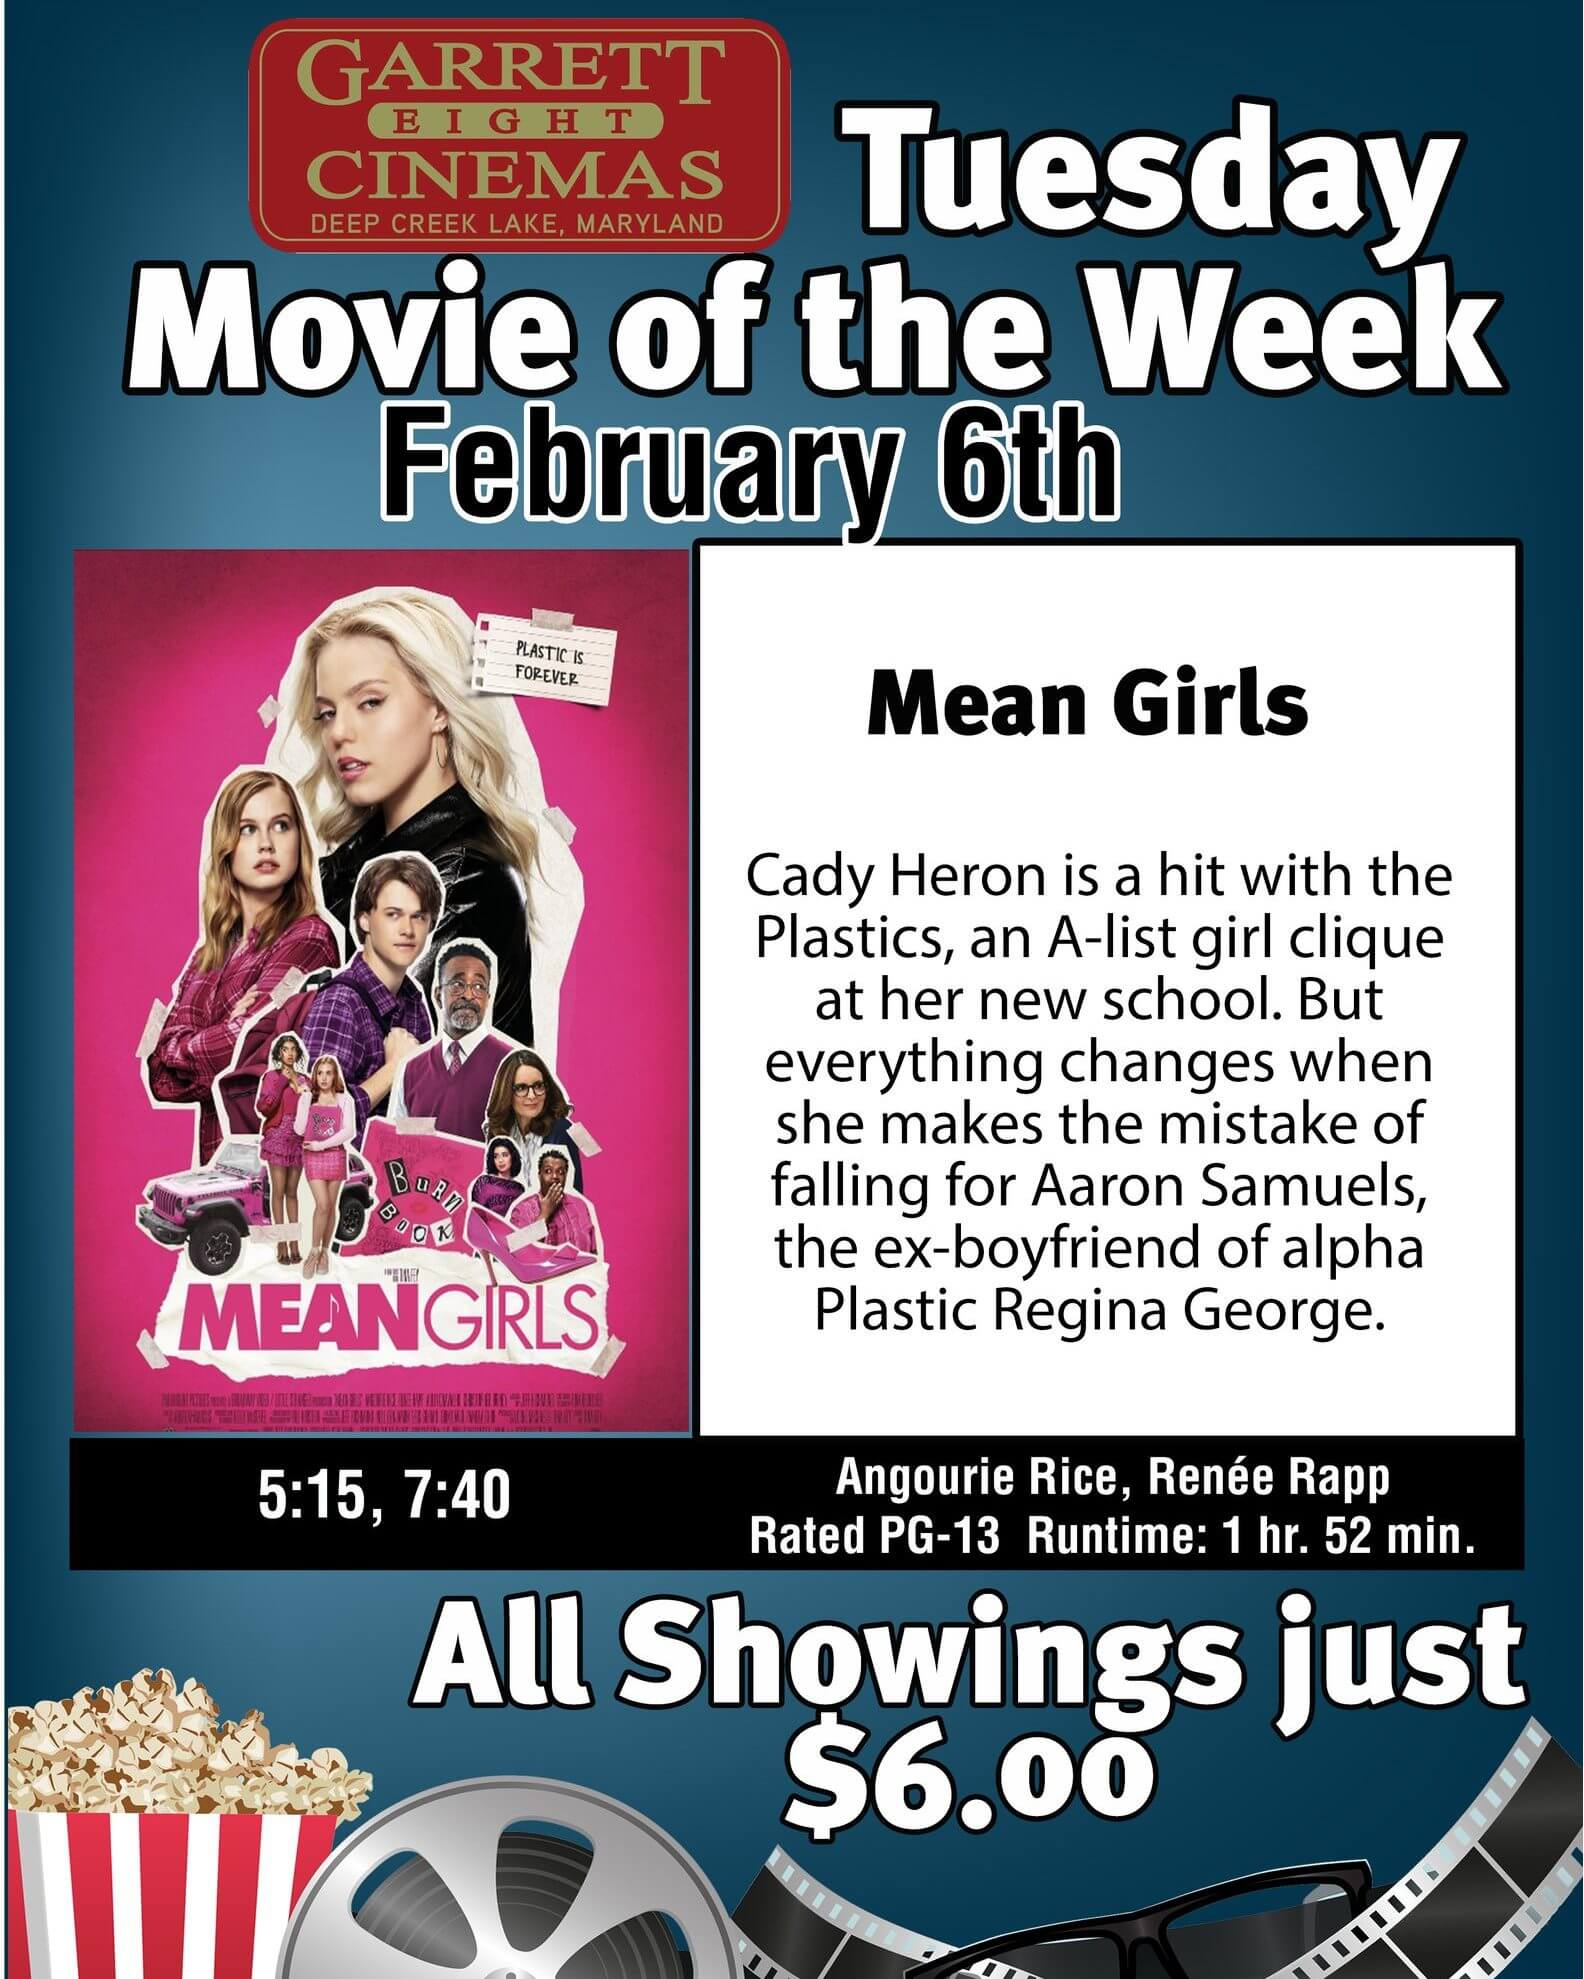 Garrett 8 Cinemas: Tuesday Movie of the Week (Mean Girls) at Deep Creek Lake, MD